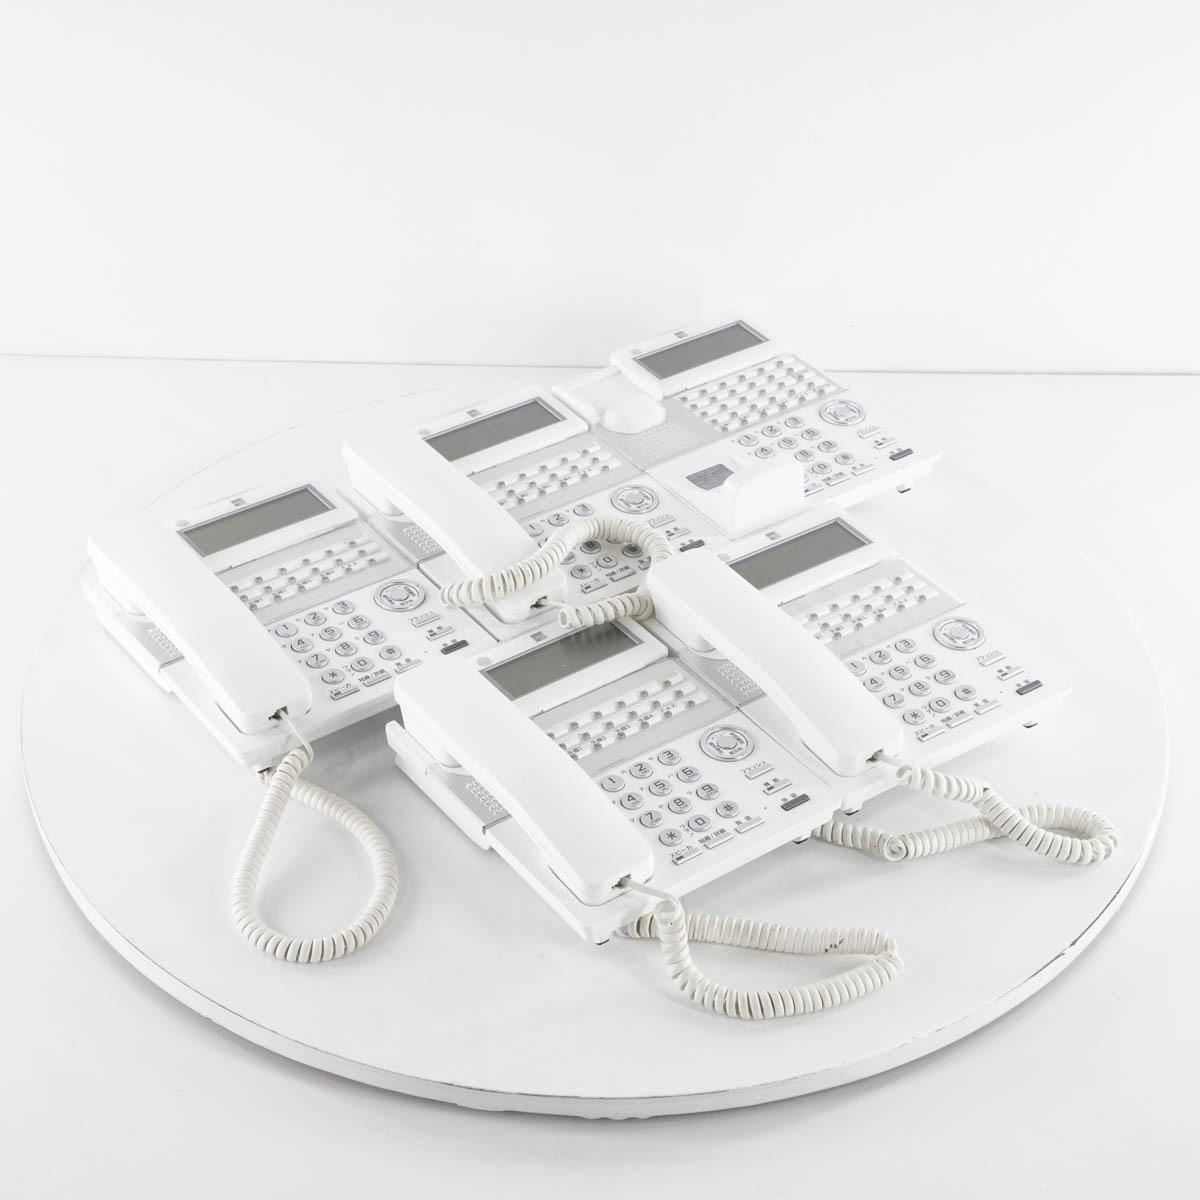 [JB] ジャンク セット TD810(W) CL825 SAXA サクサ 電話機 ビジネスフォン[05584-0107]の画像1